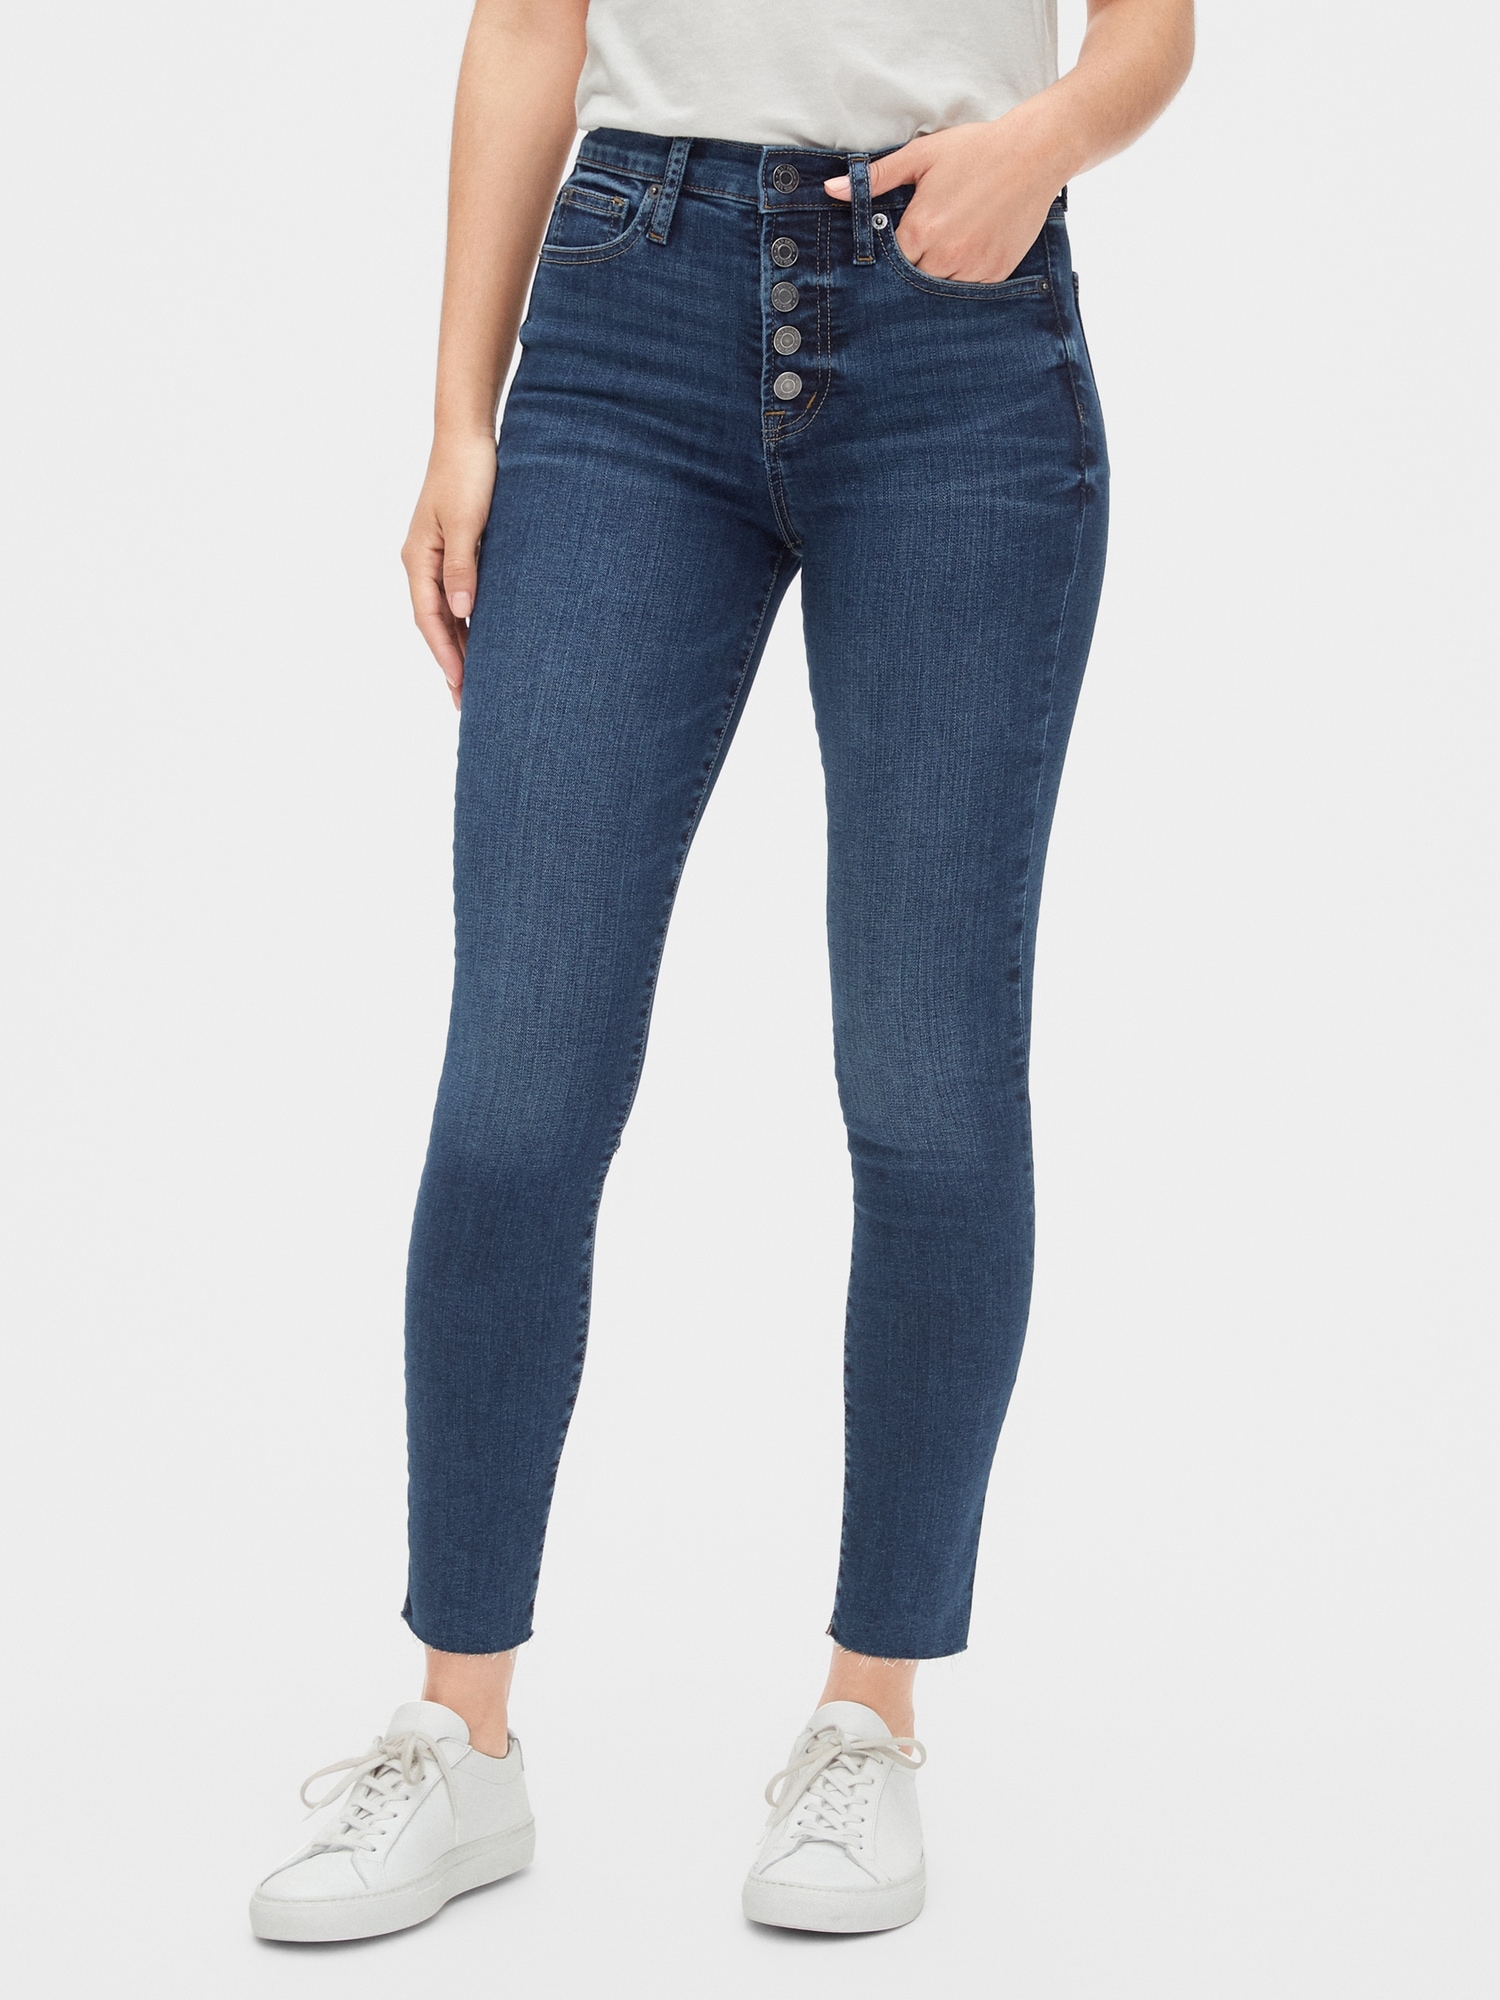 gap 1969 true skinny jeans